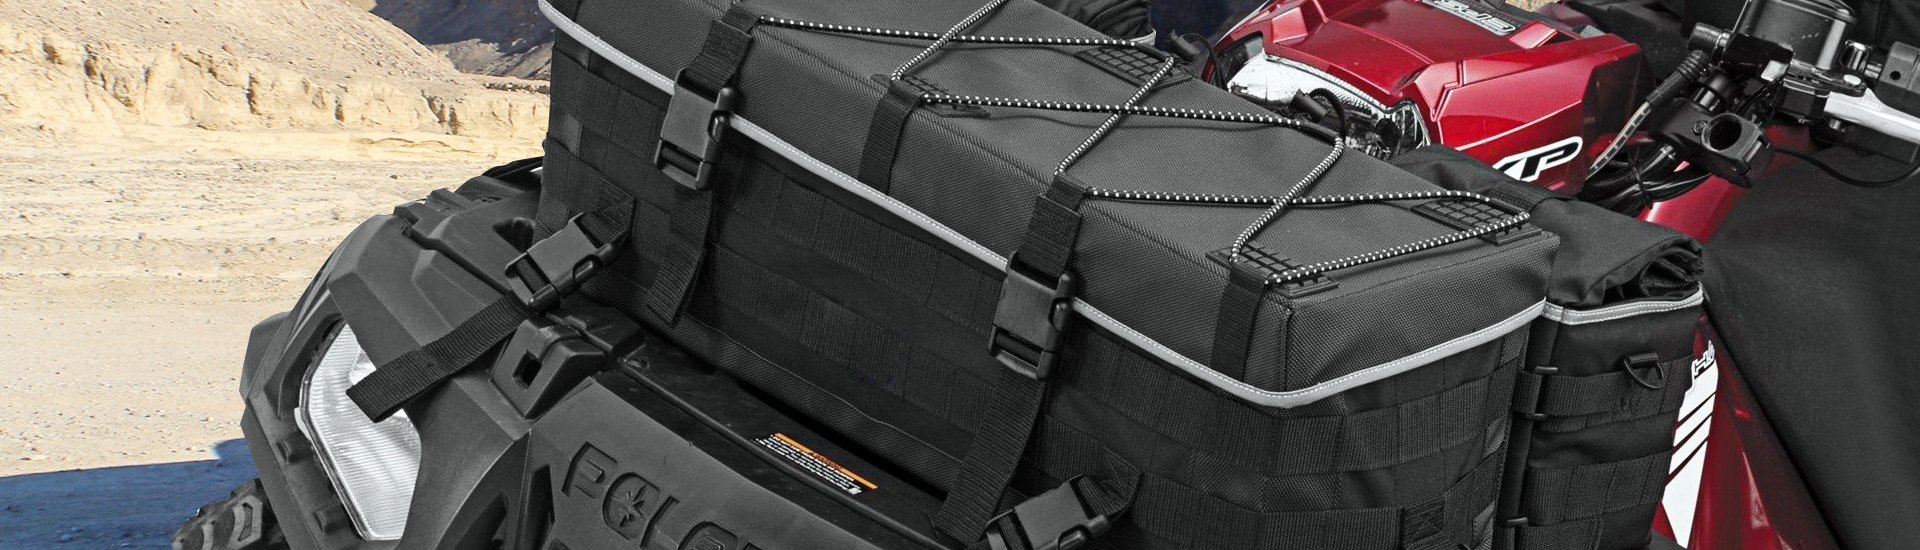 Polaris Sportsman 570 L ATV Luggage Box with Seat & Handles 